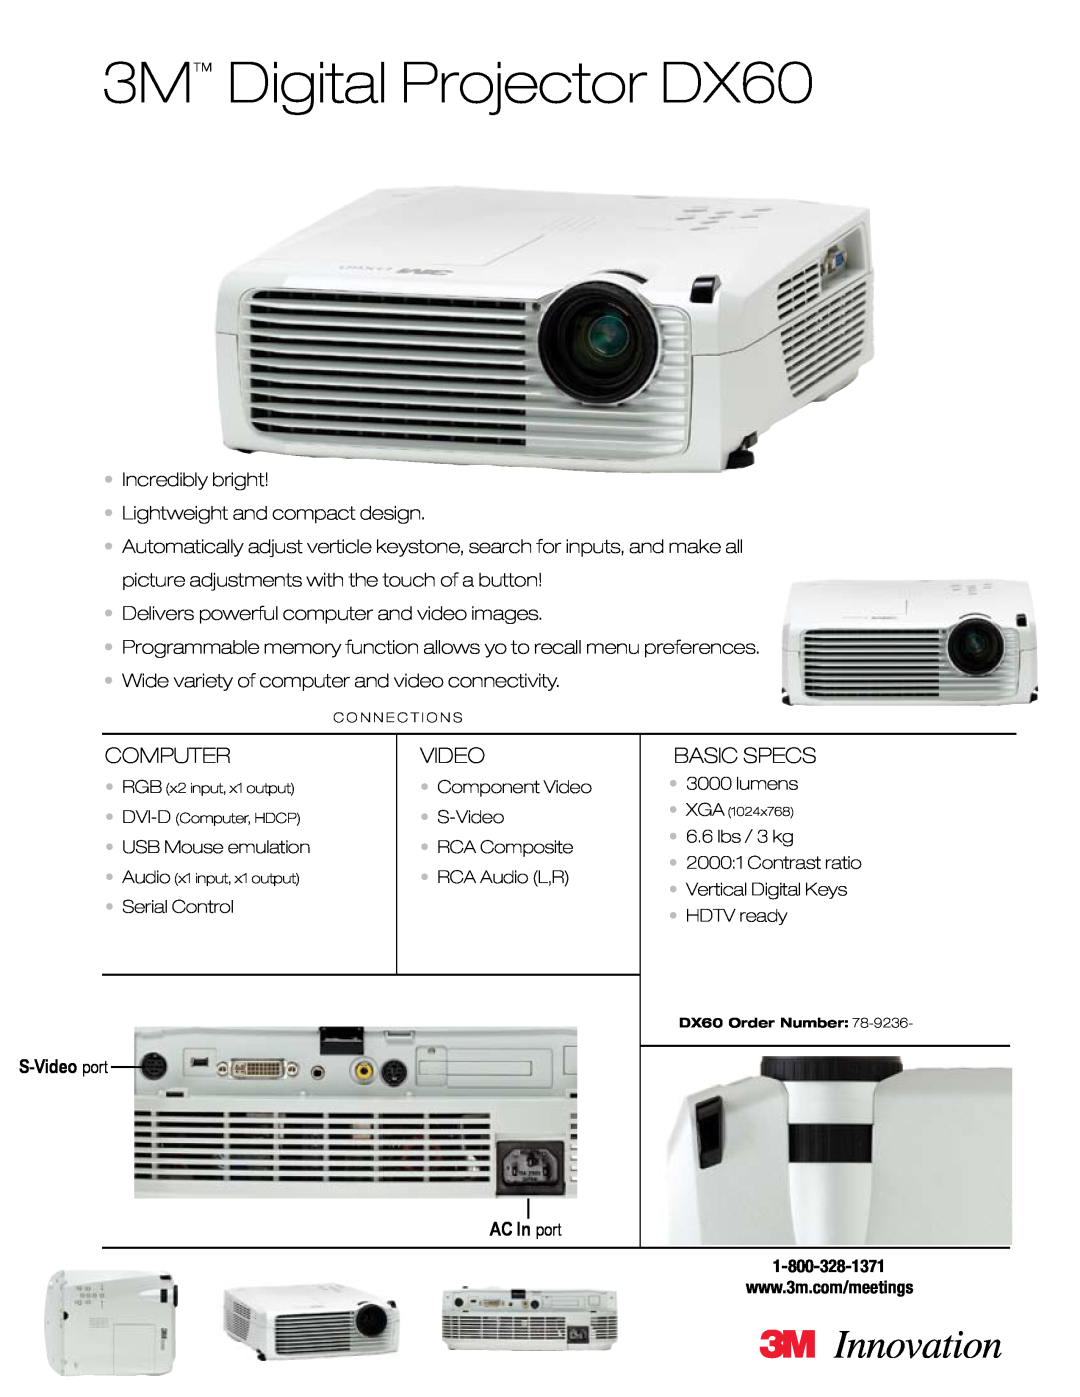 3M manual 3M Digital Projector DX60, Innovation, Computer, Basic Specs, S-Video port AC In port 